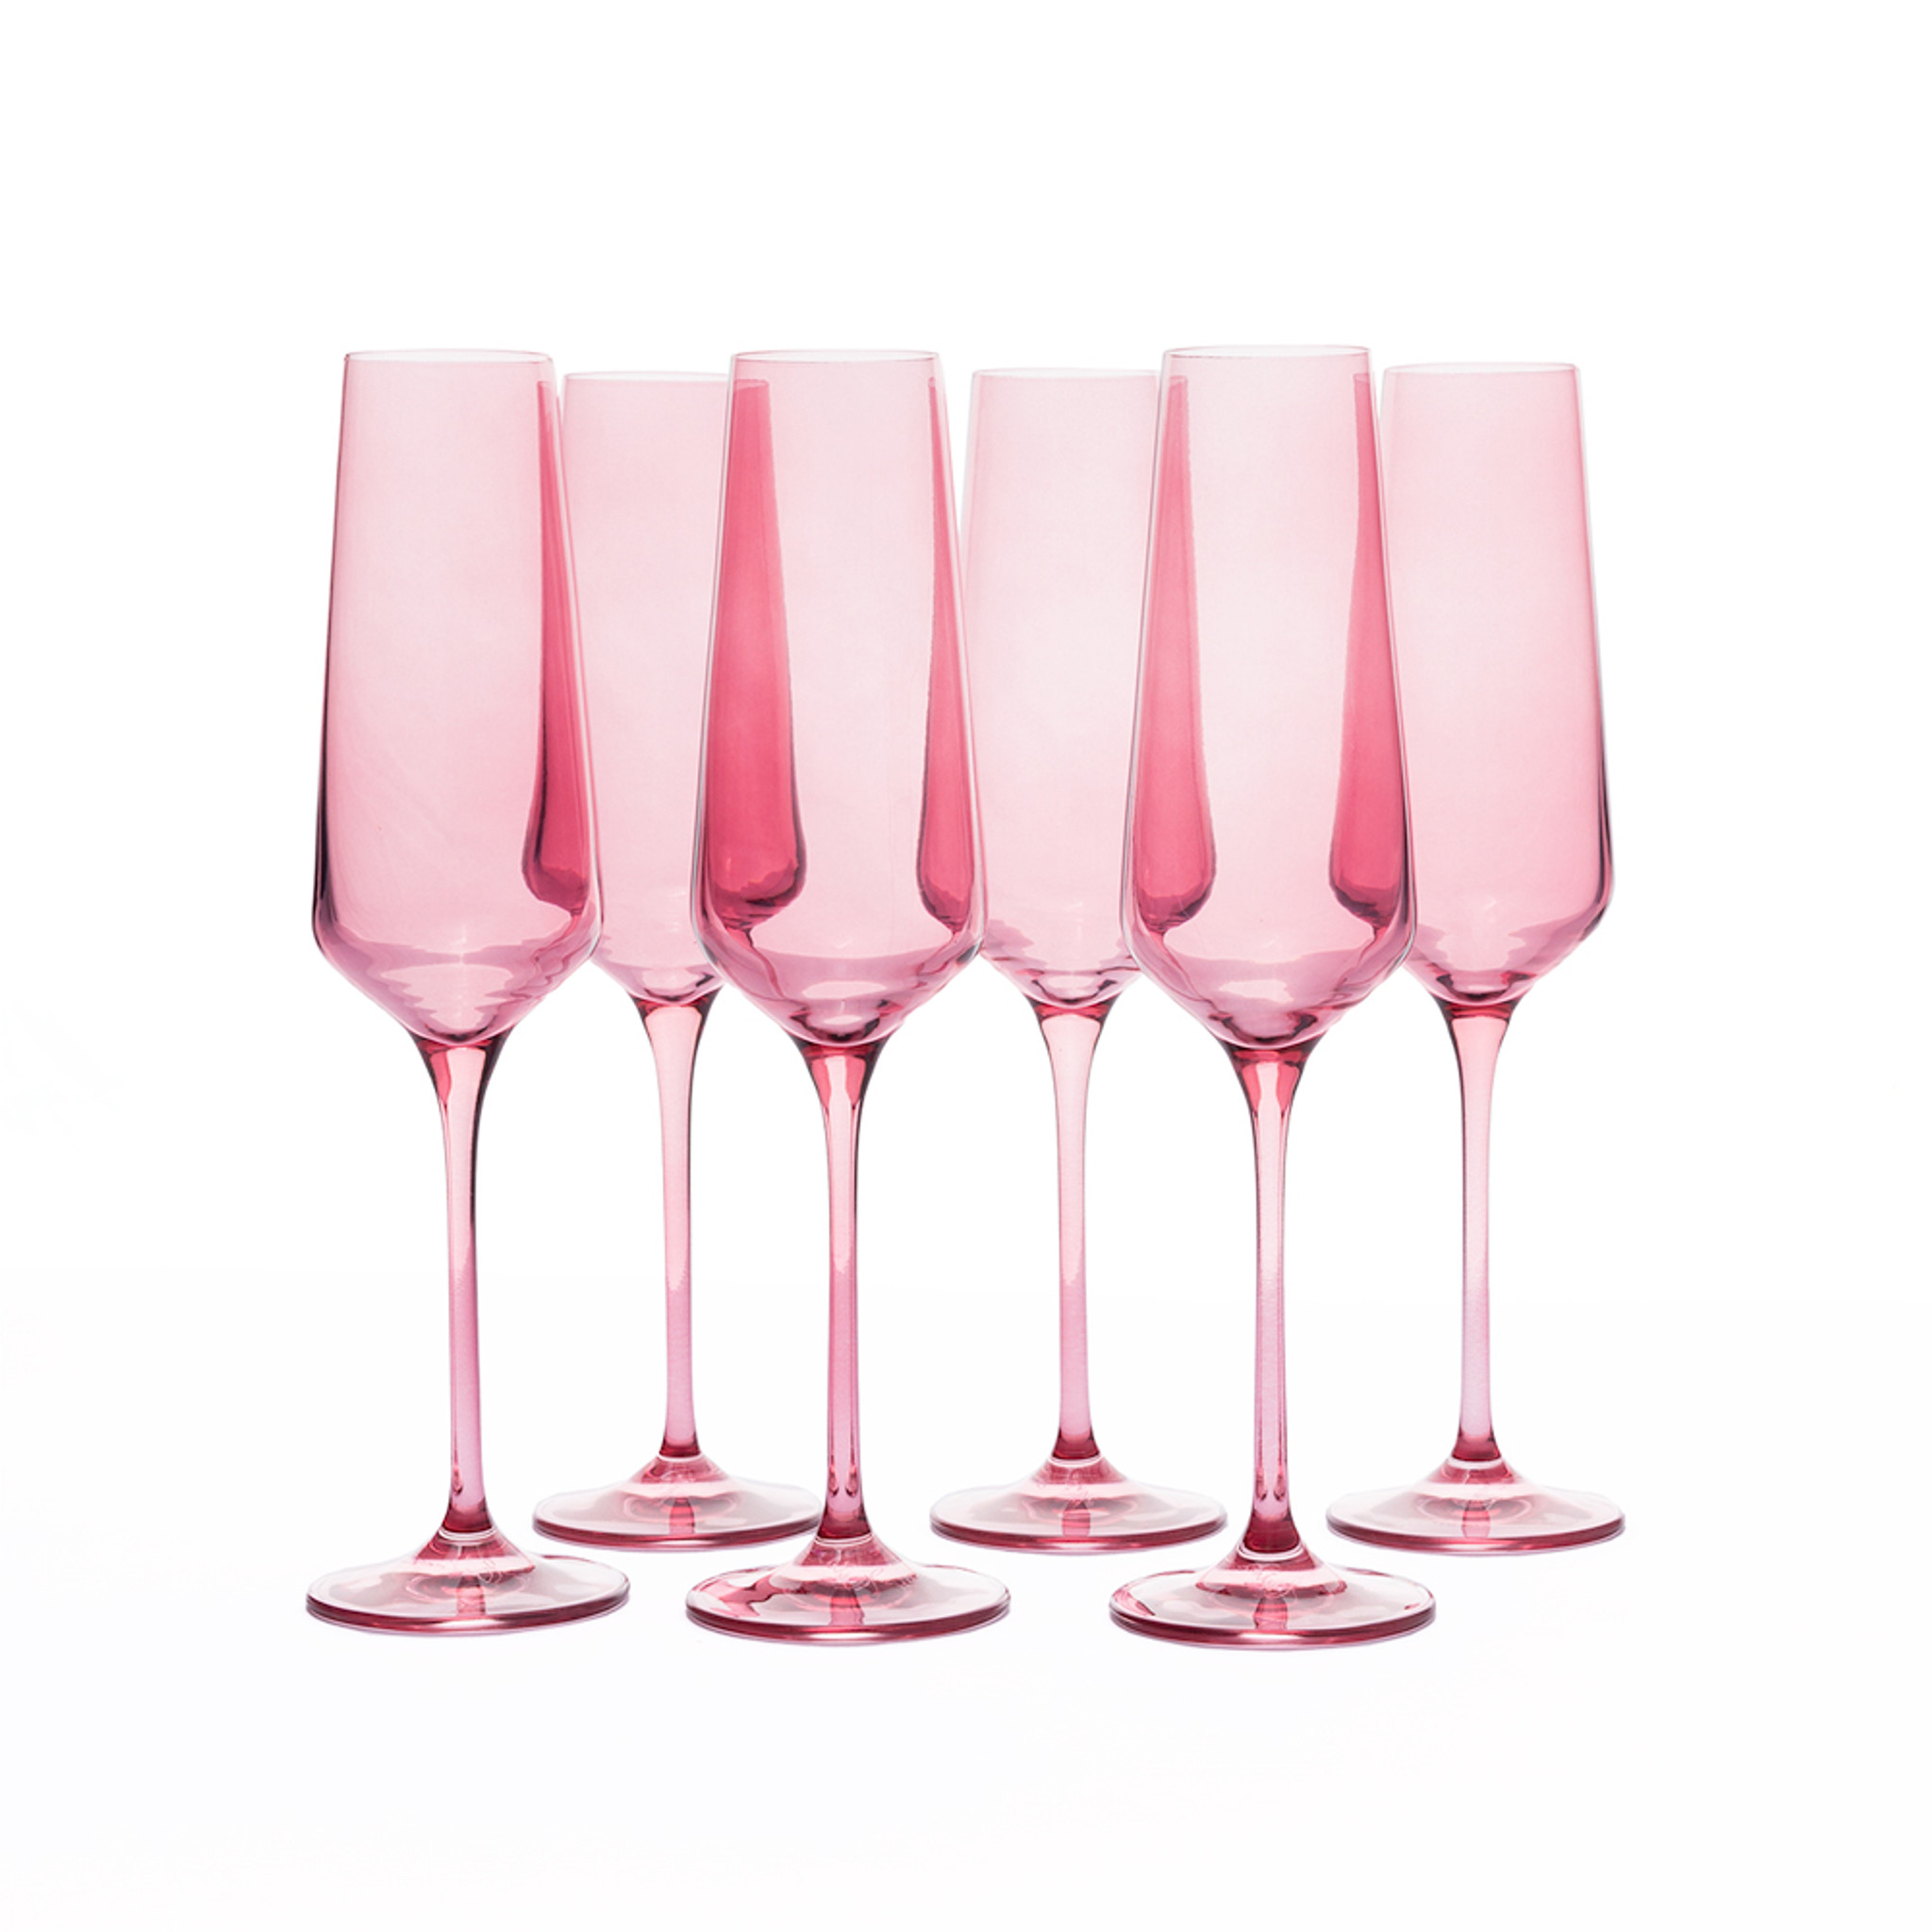 Estelle Colored Glass Champagne Flute 6-Piece Set Rose